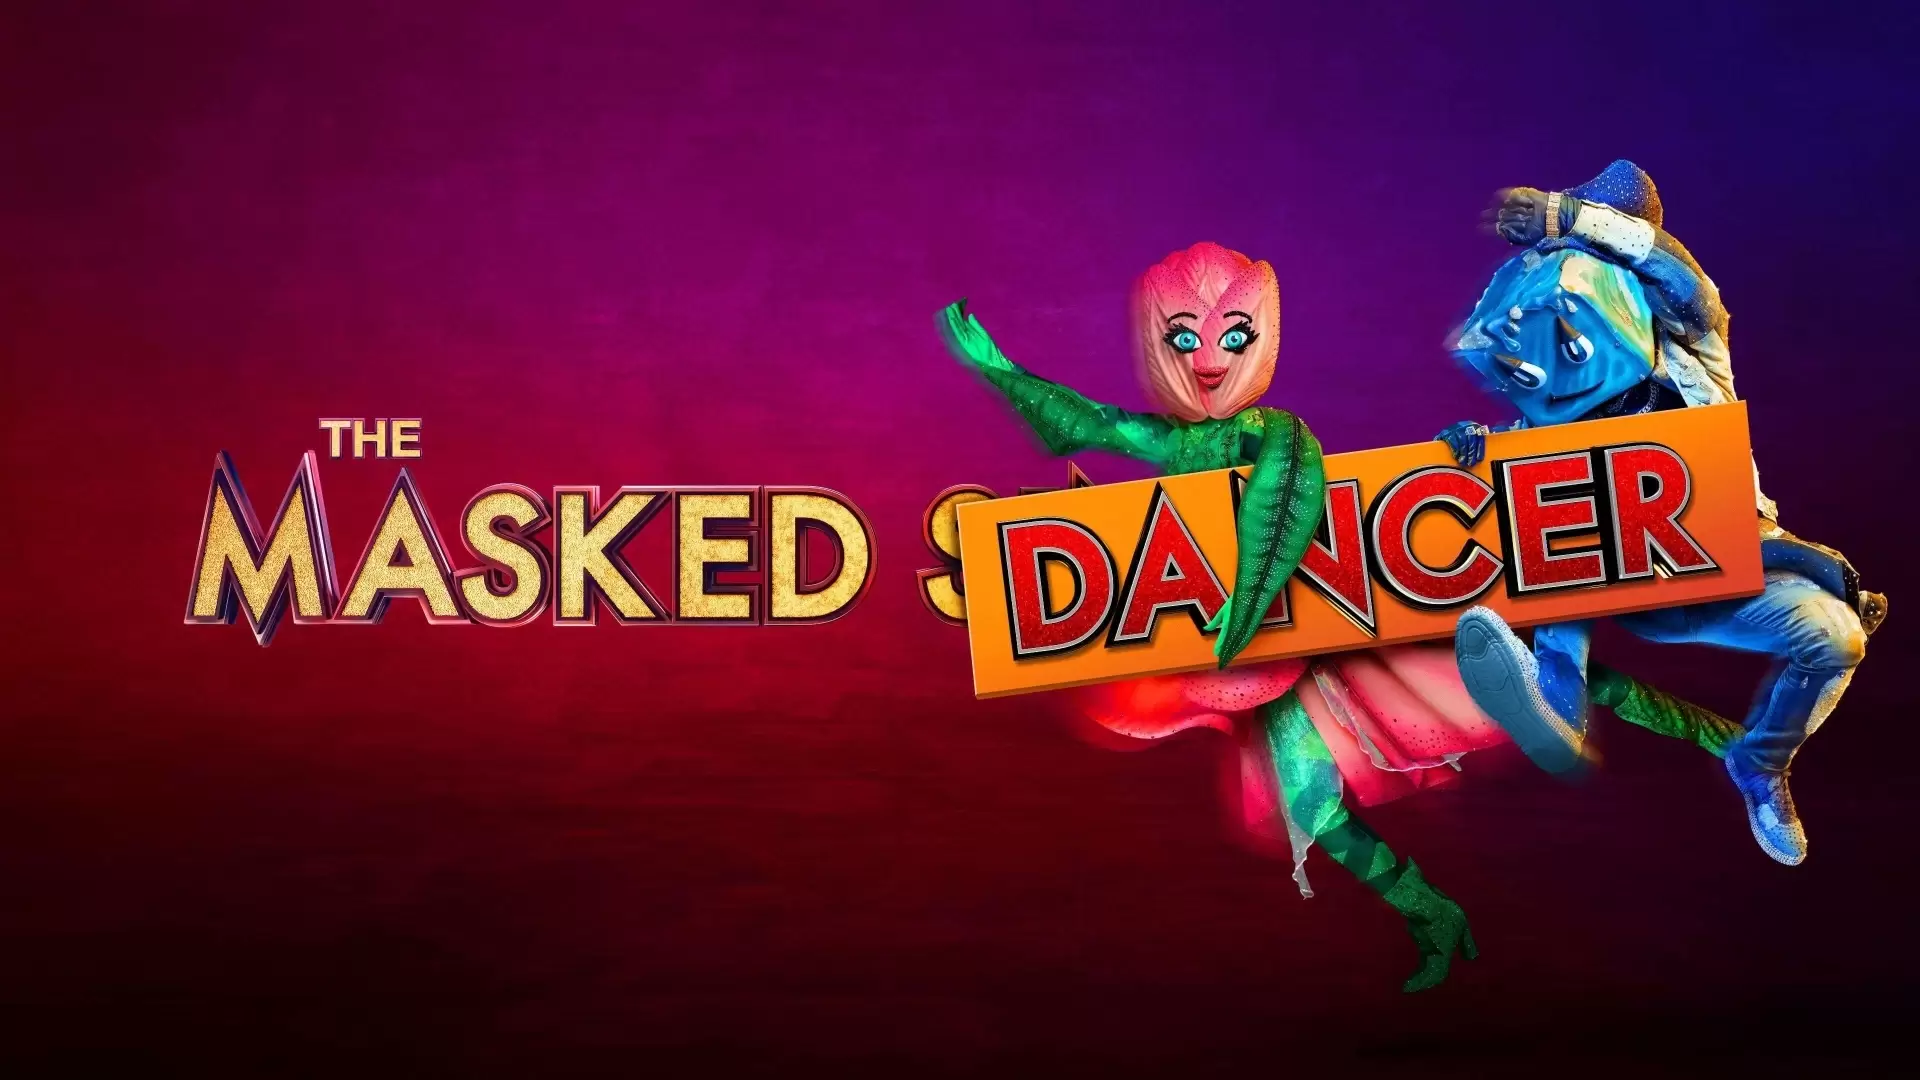 دانلود سریال The Masked Dancer 2020 (رقاص ماسک دار)